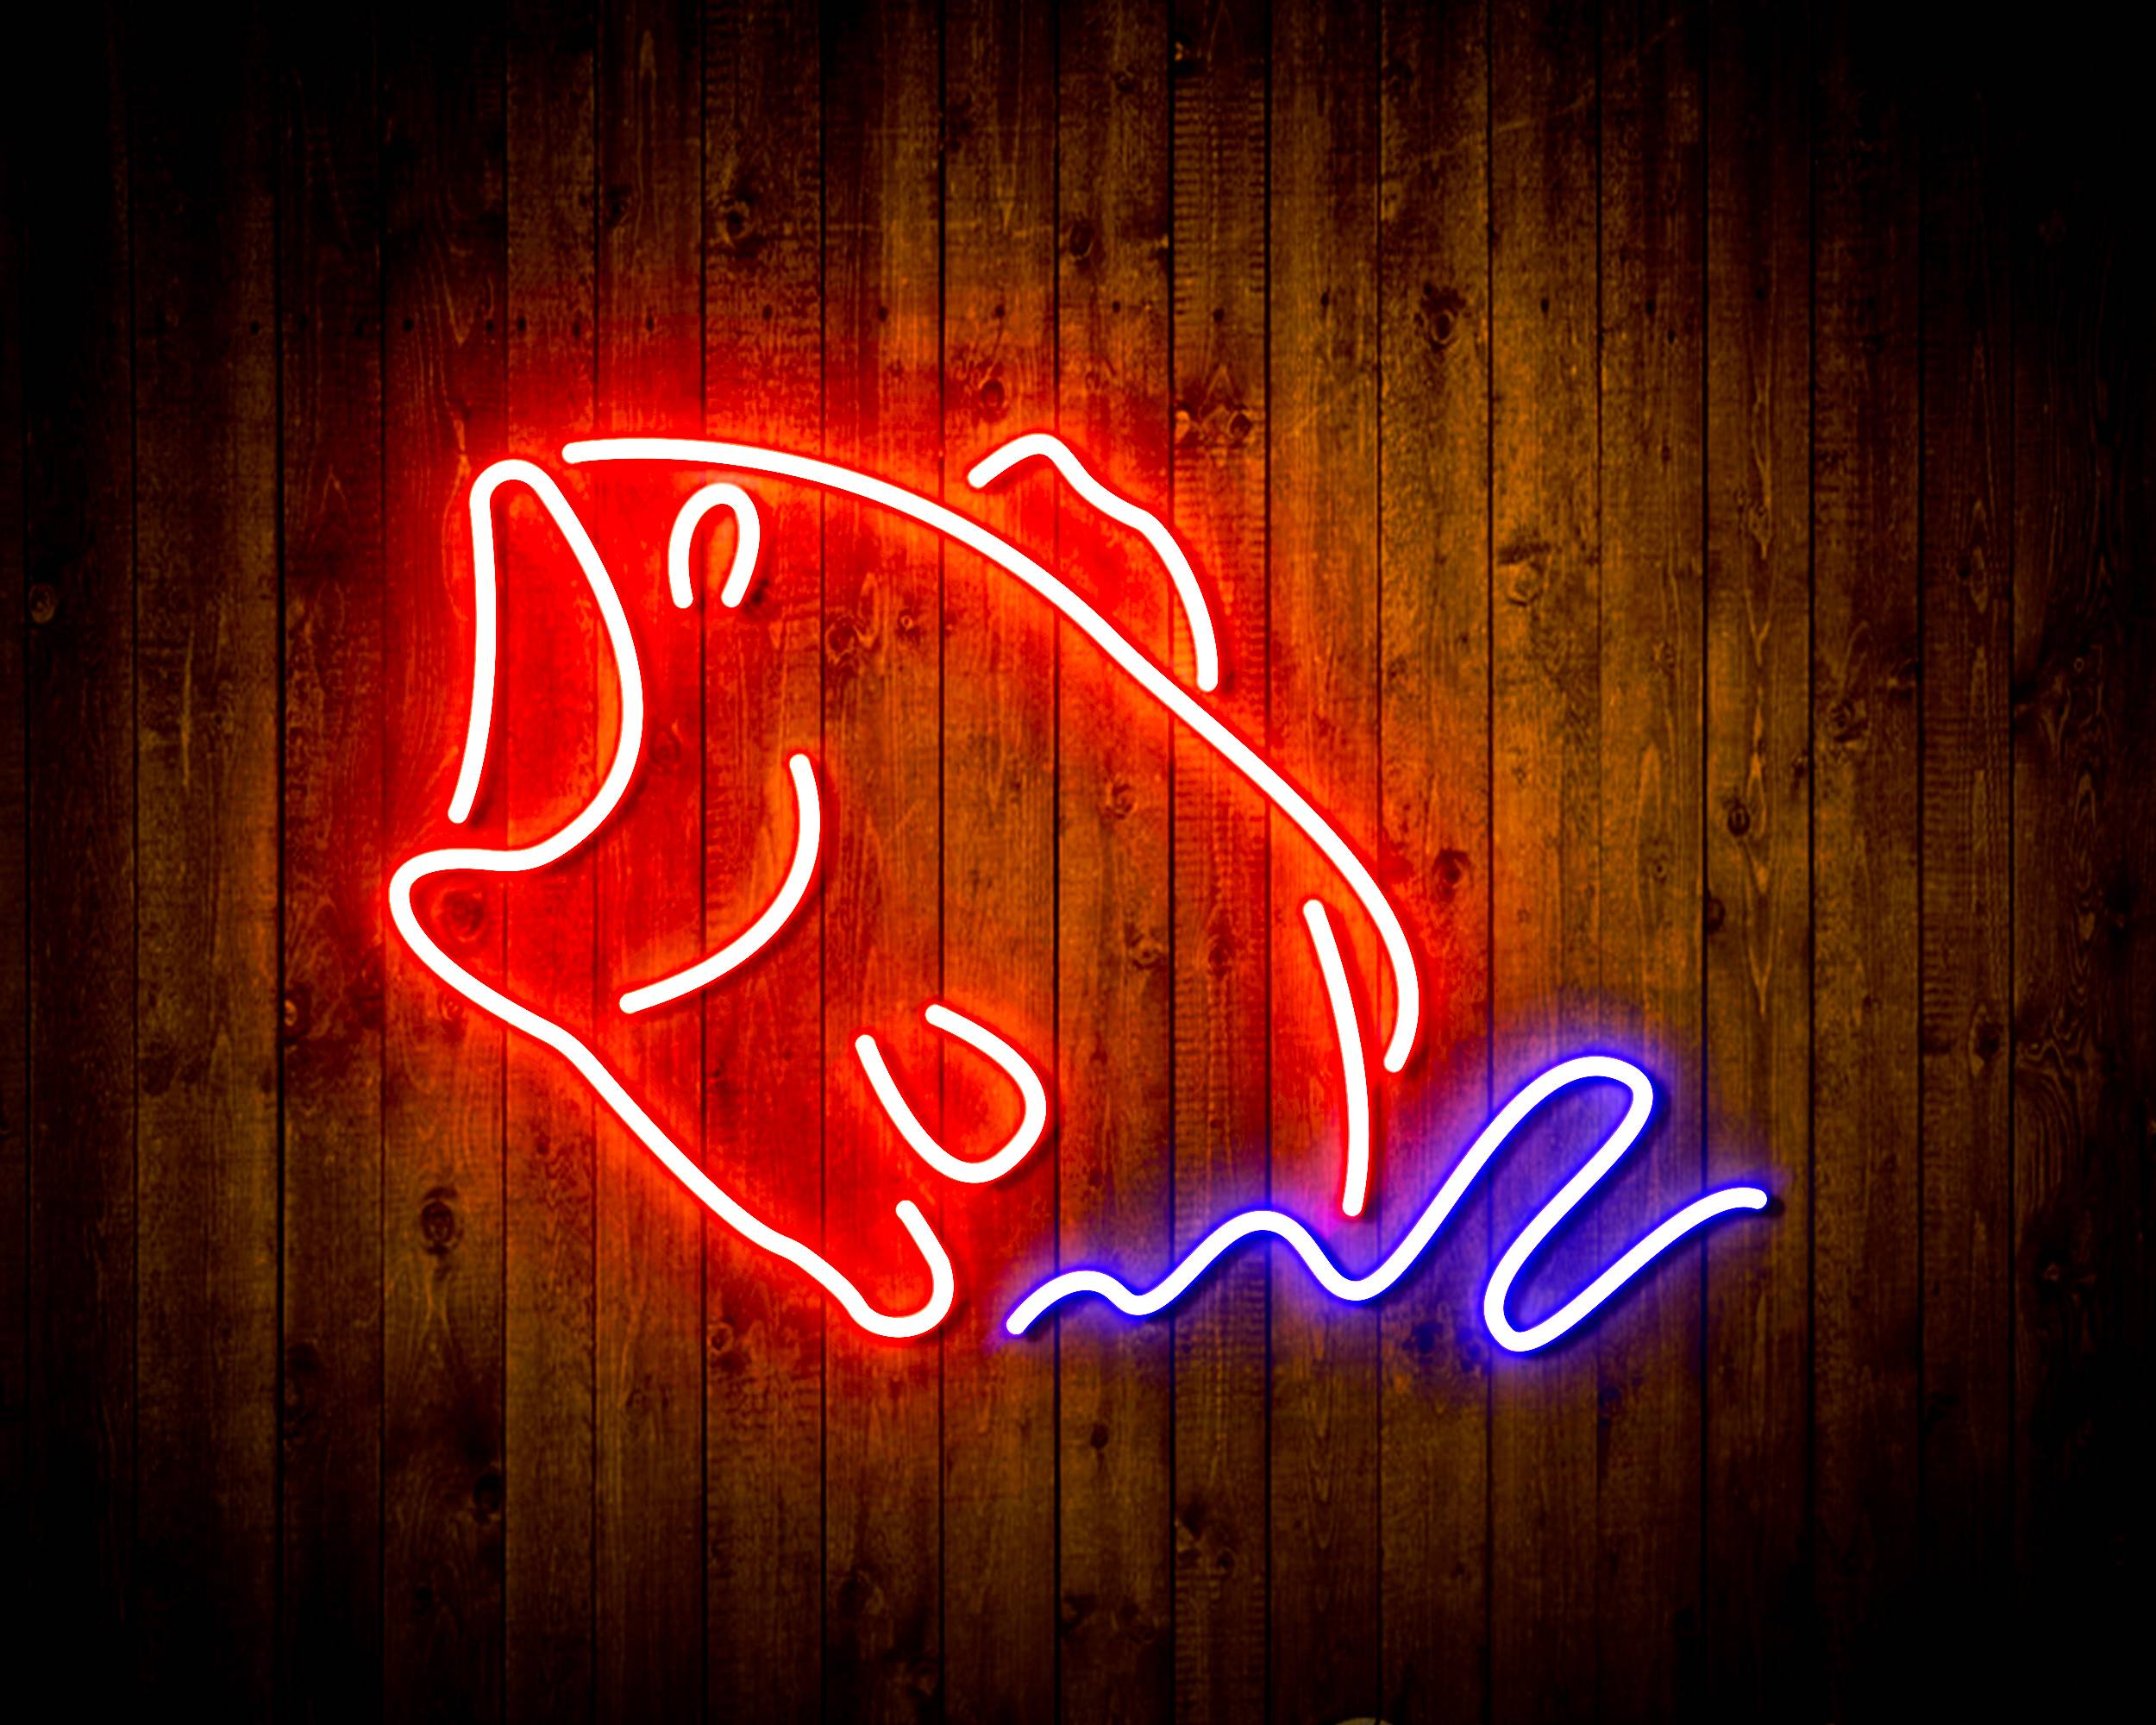 Fish for Busch Handmade Neon Flex LED Sign